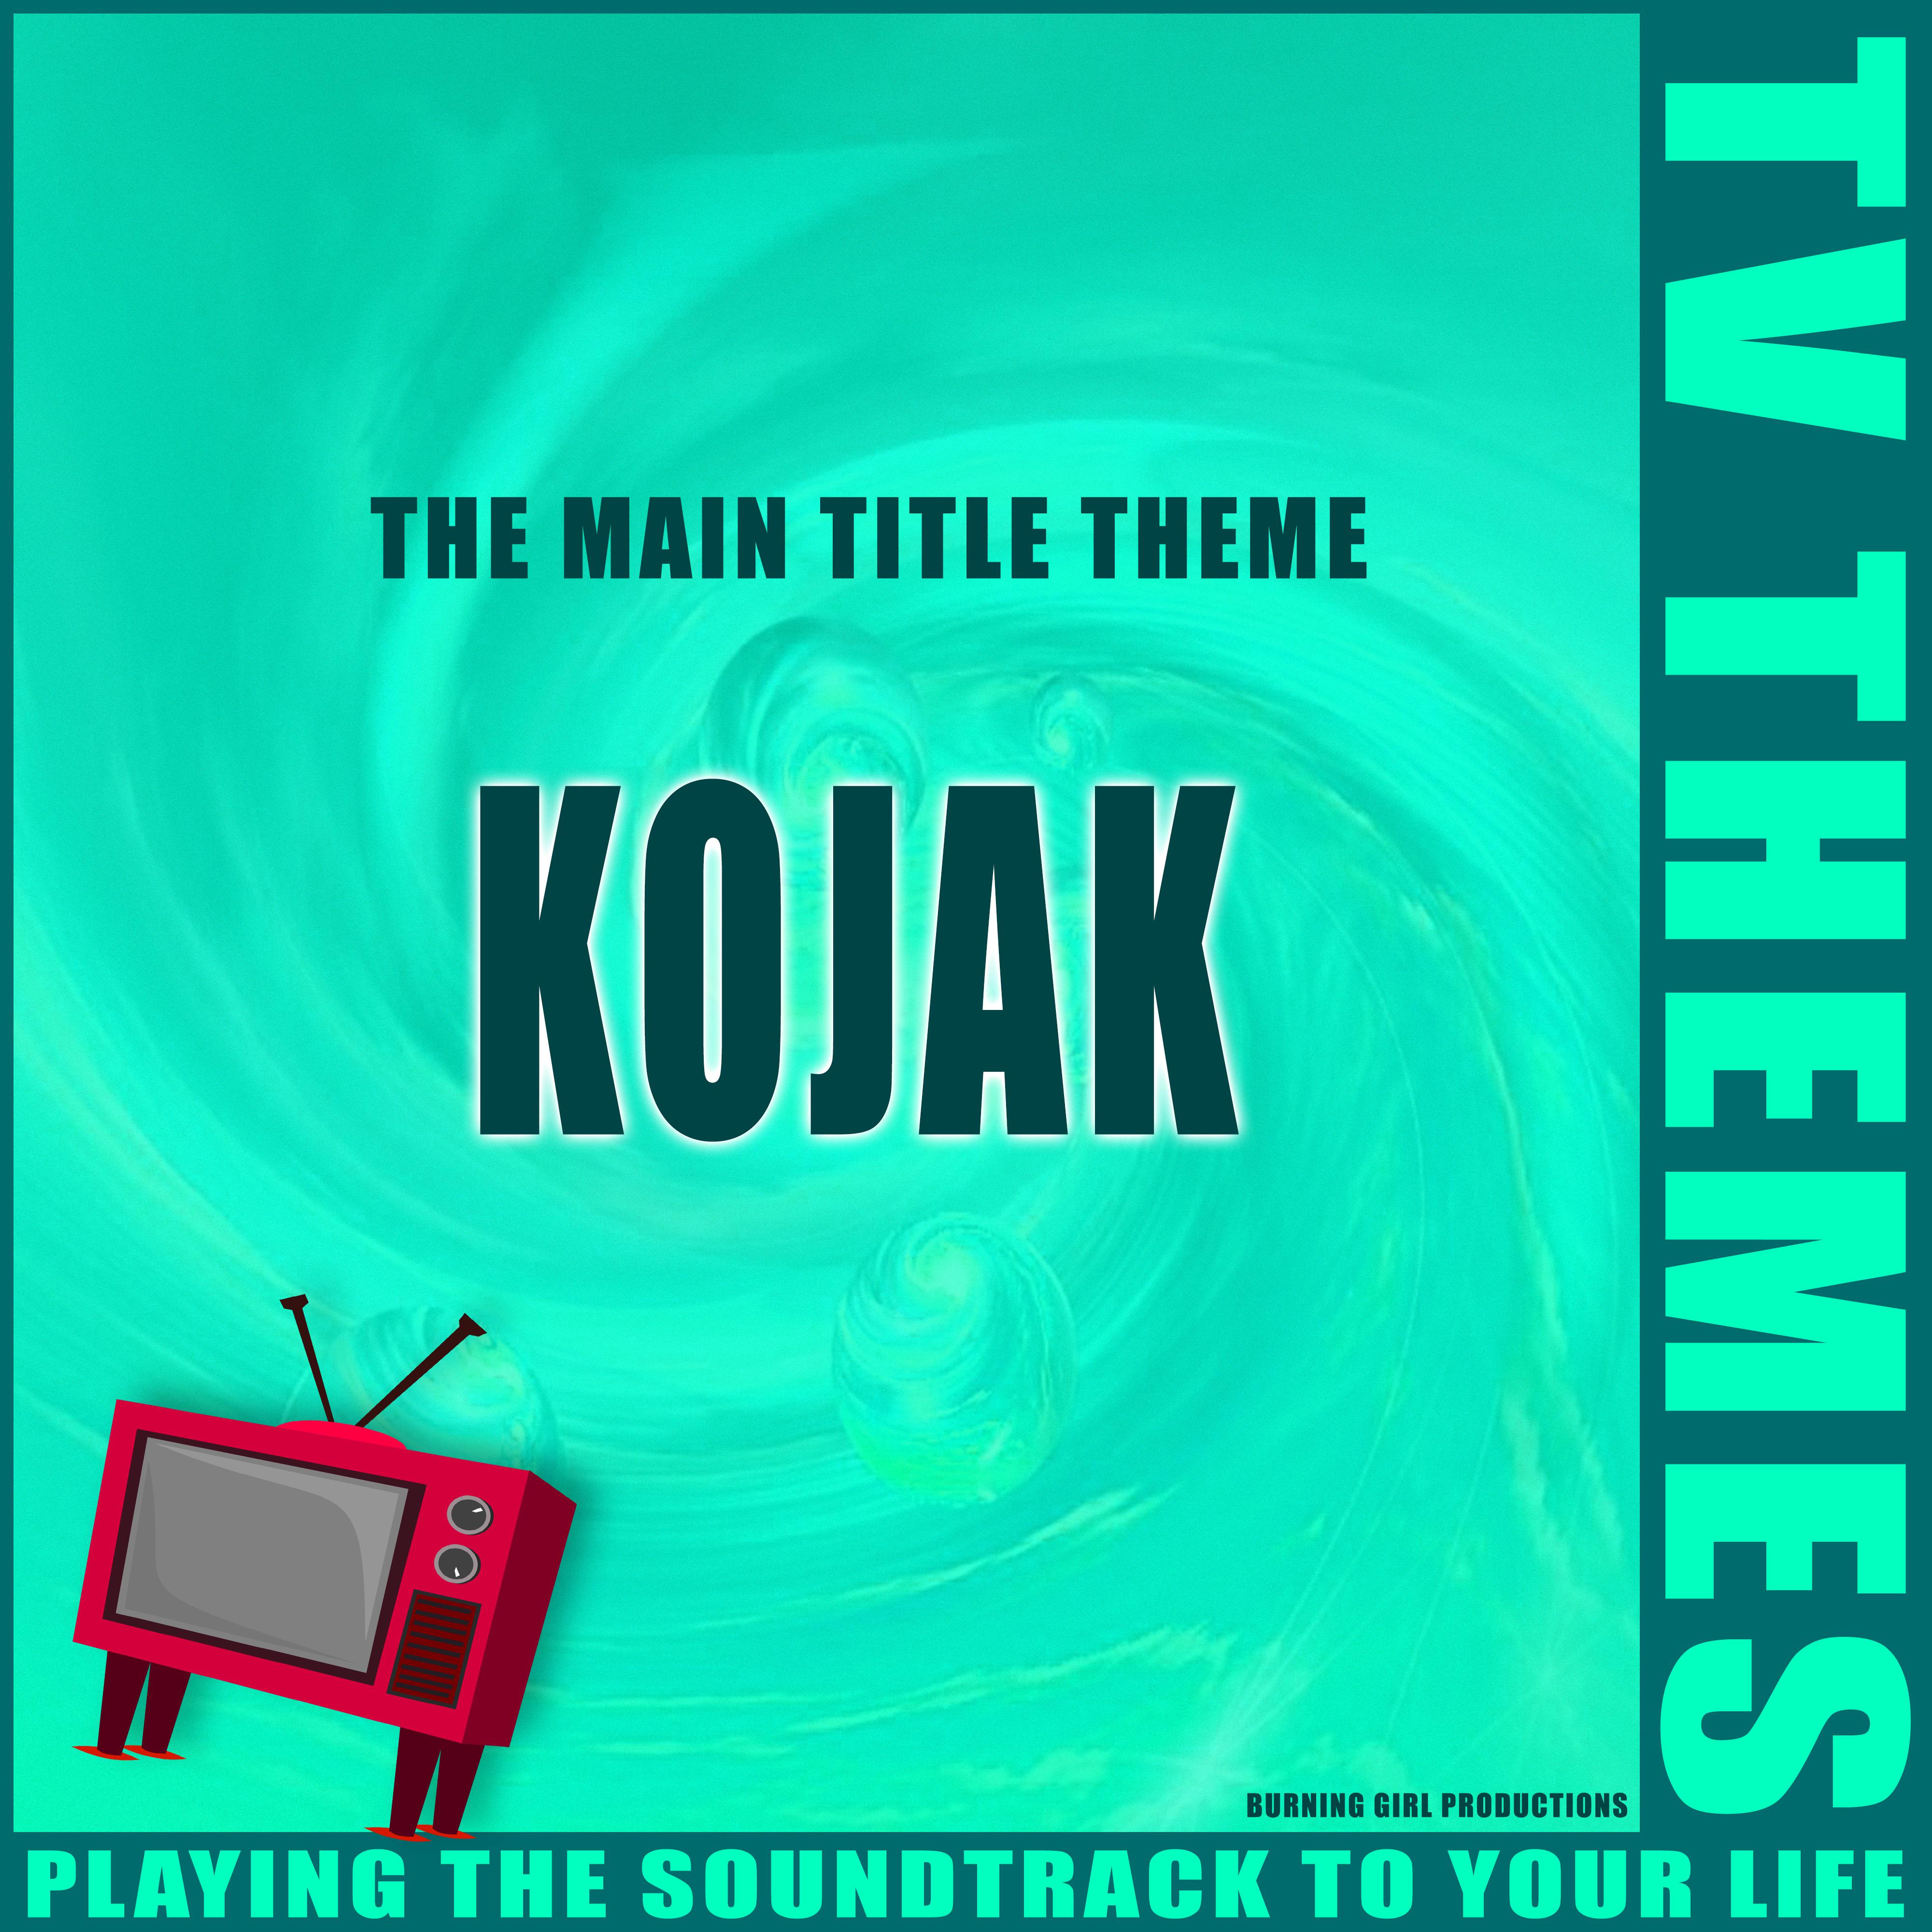 The Main Title Theme - Kojak